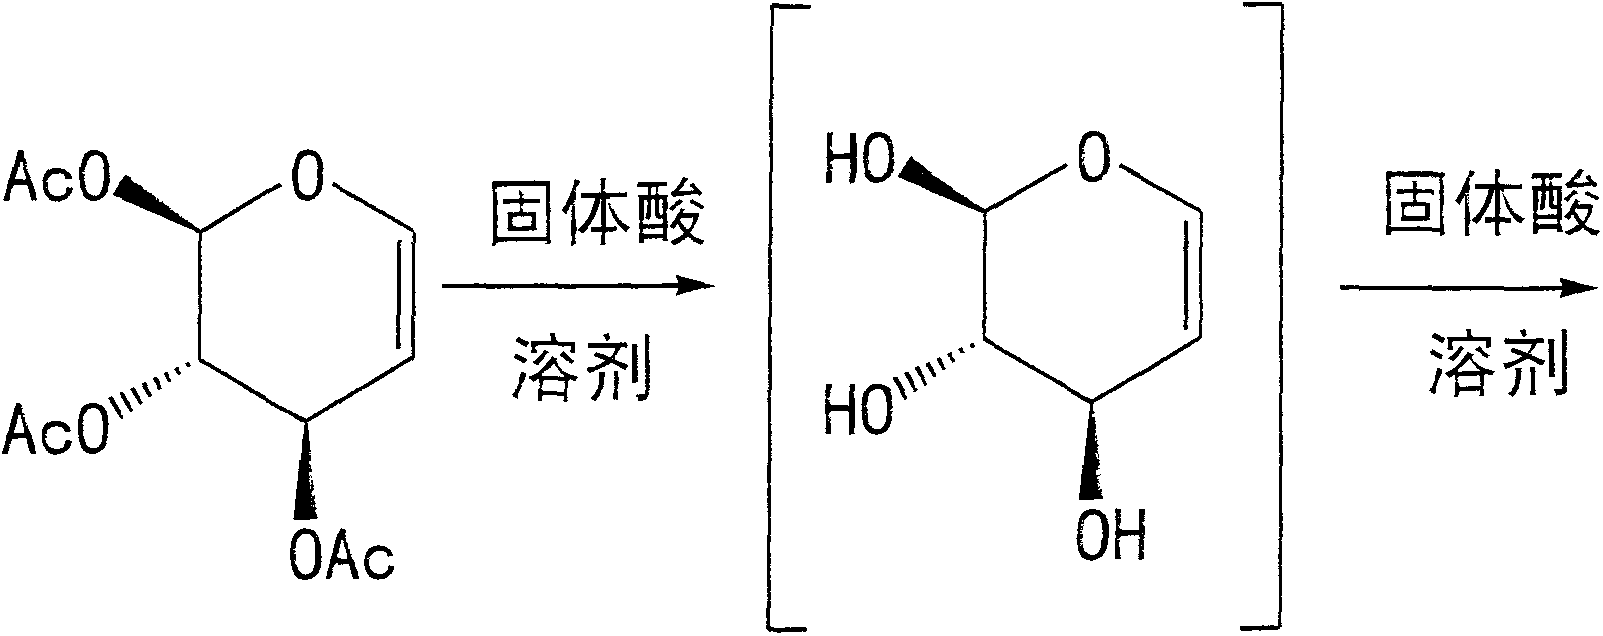 Preparation method of 2-deoxy-D-glucose